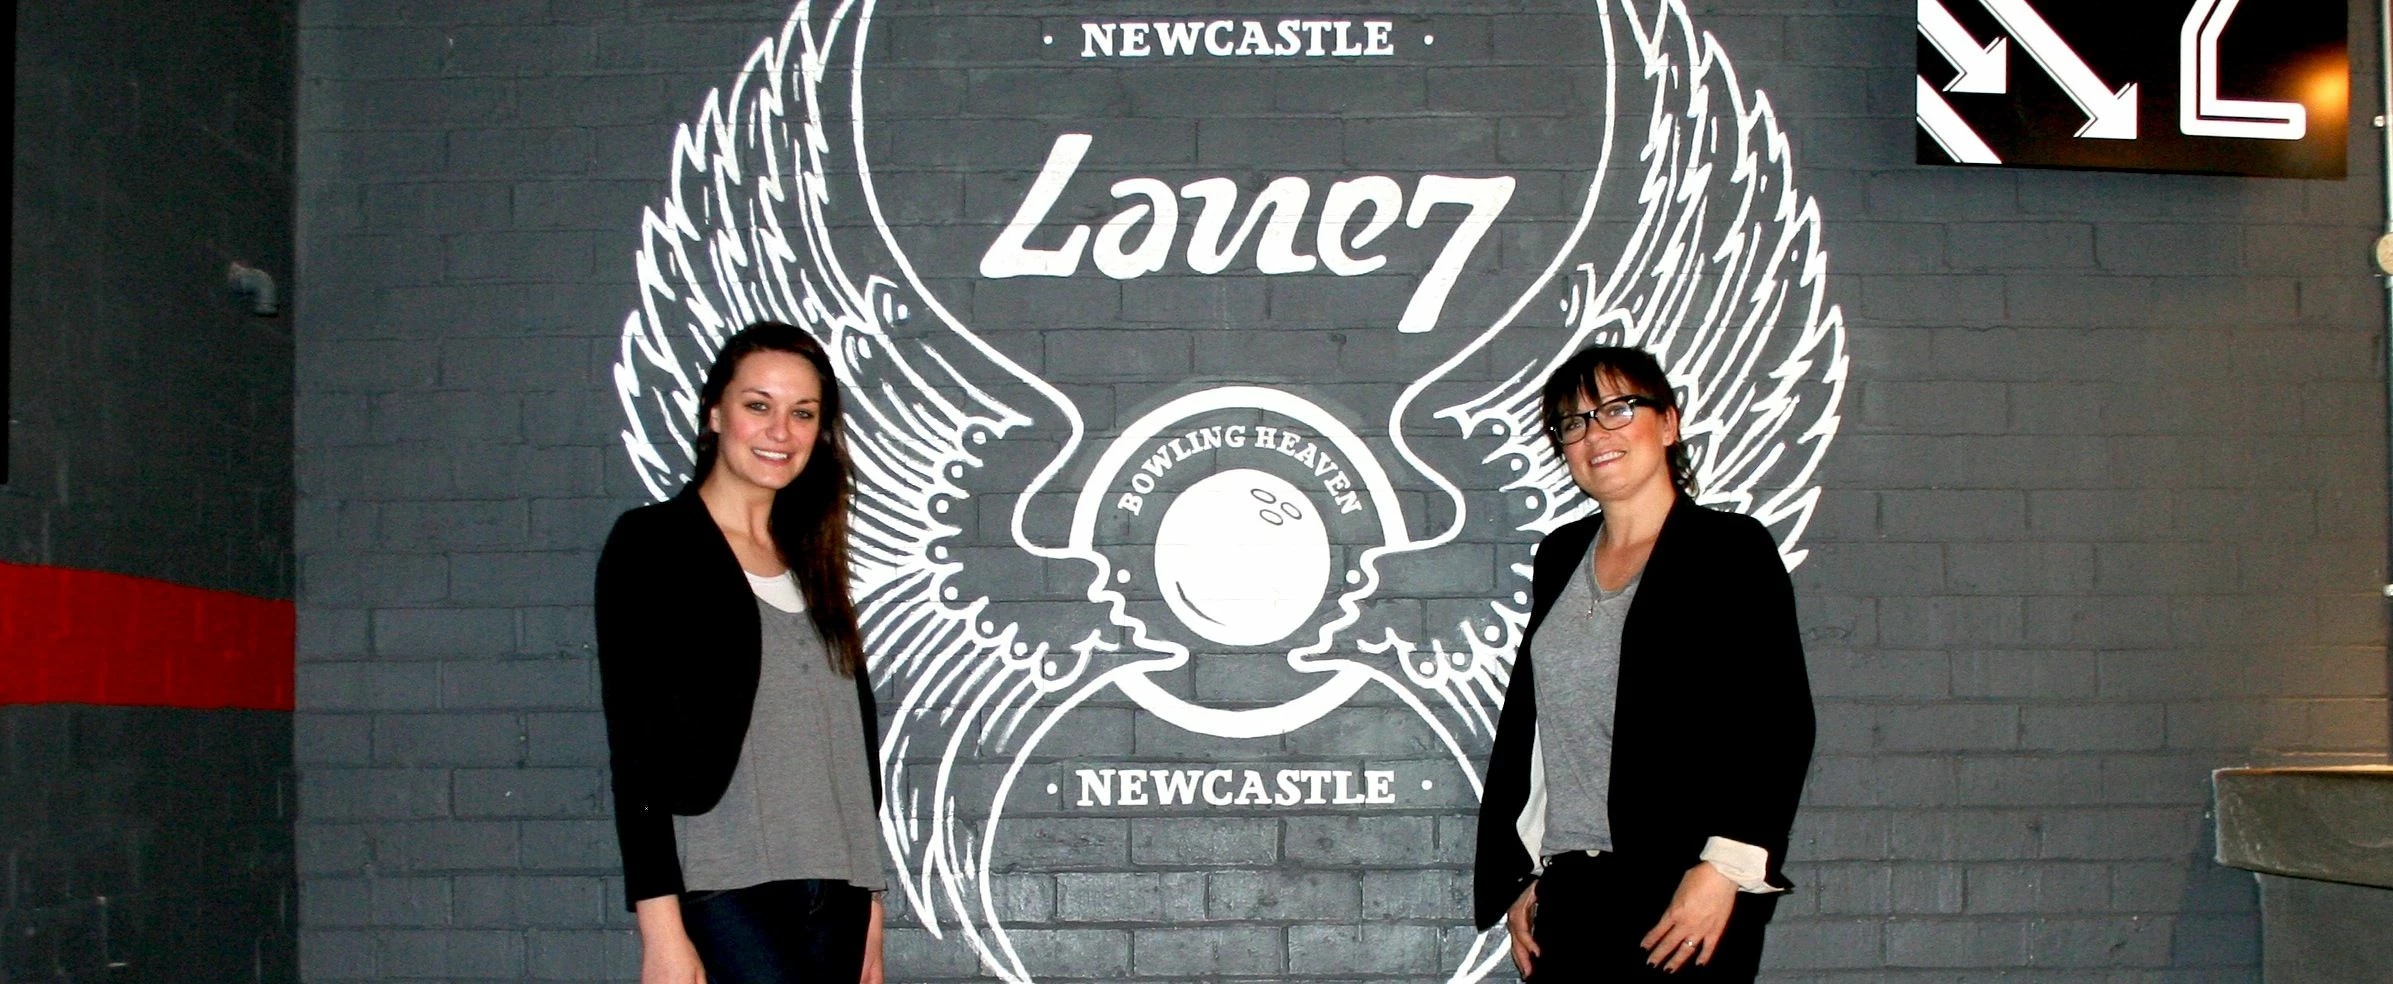 Kari Owers and Chrissie Denton at Lane7 in Newcastle